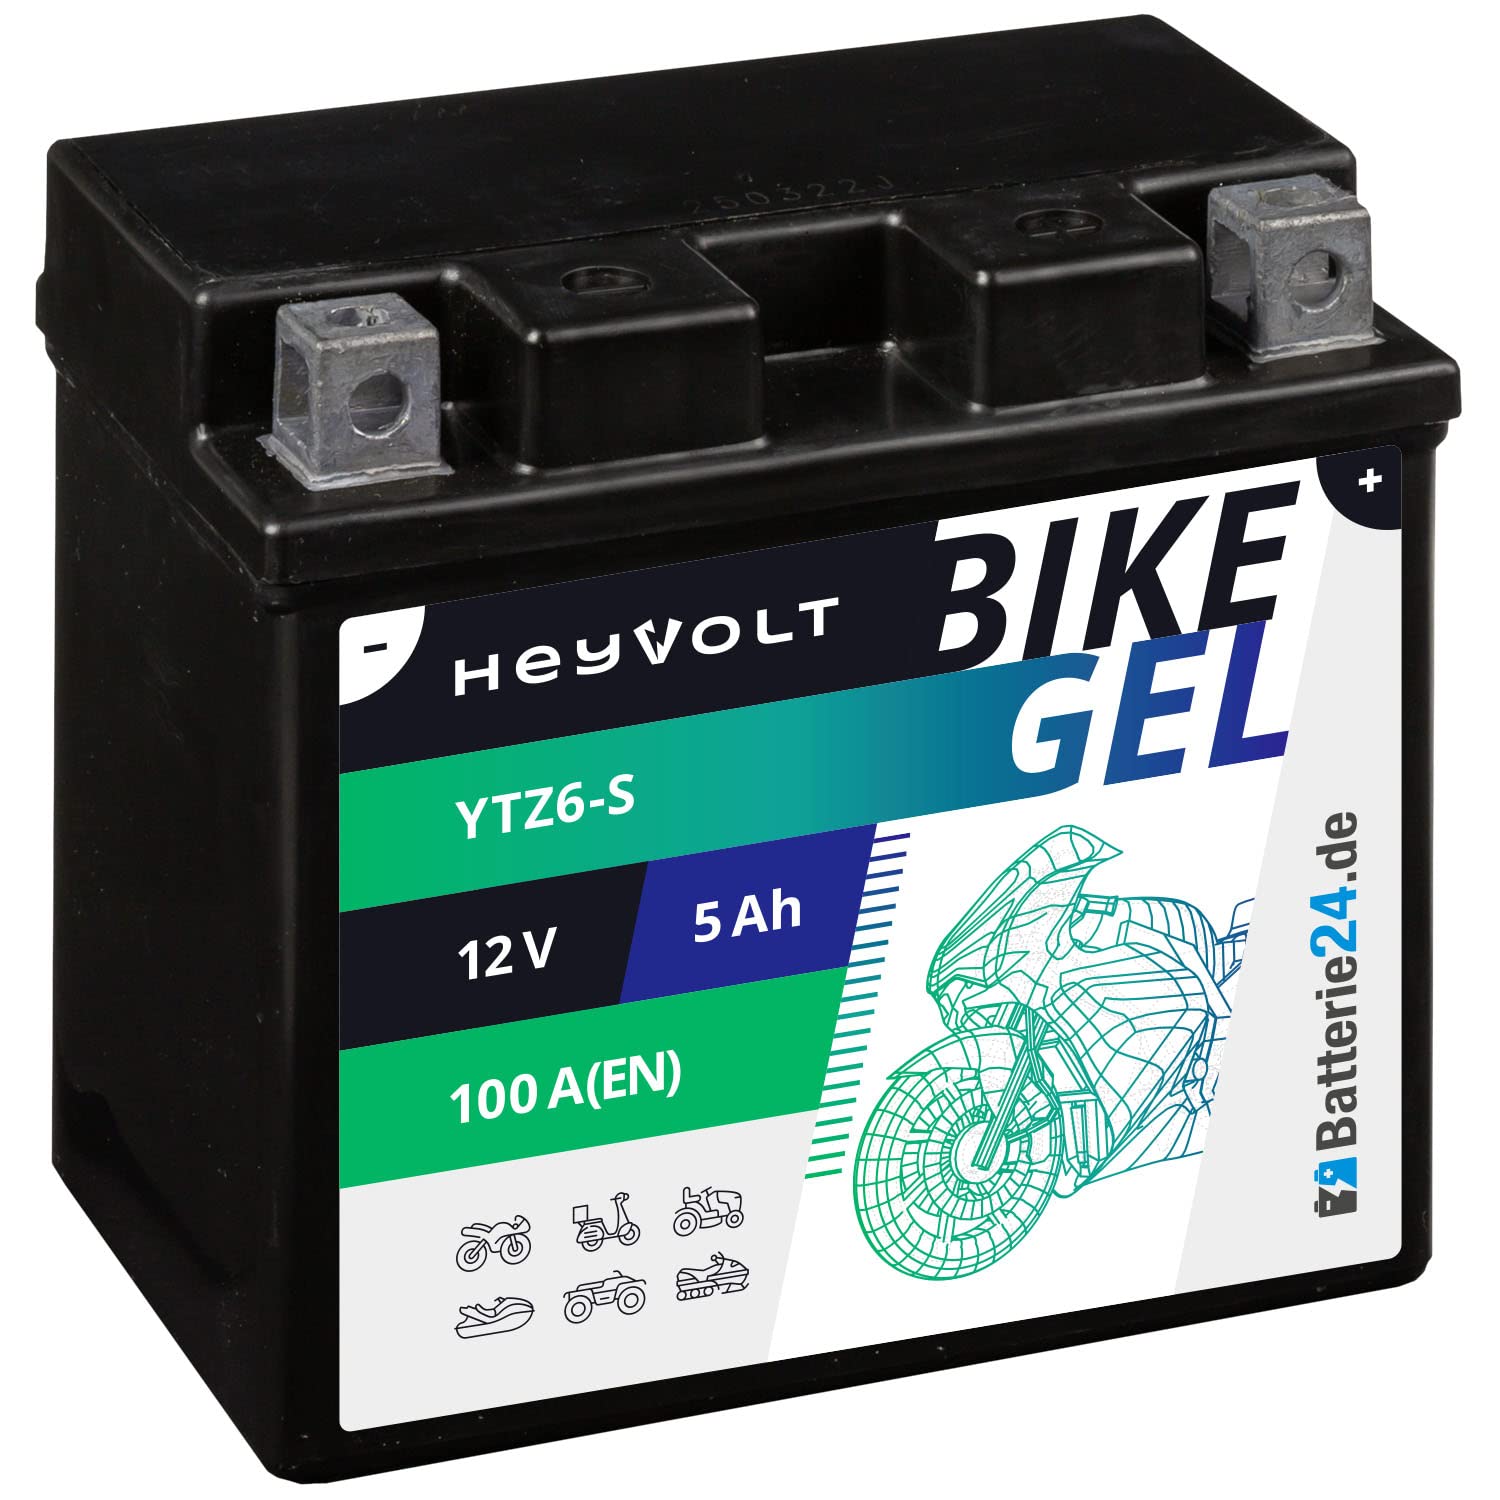 HeyVolt GEL Motorradbatterie 12V 5Ah YTZ6-S YTZ6V 50616 GEL12-6ZS Quad Roller Moped von Batterie24.de